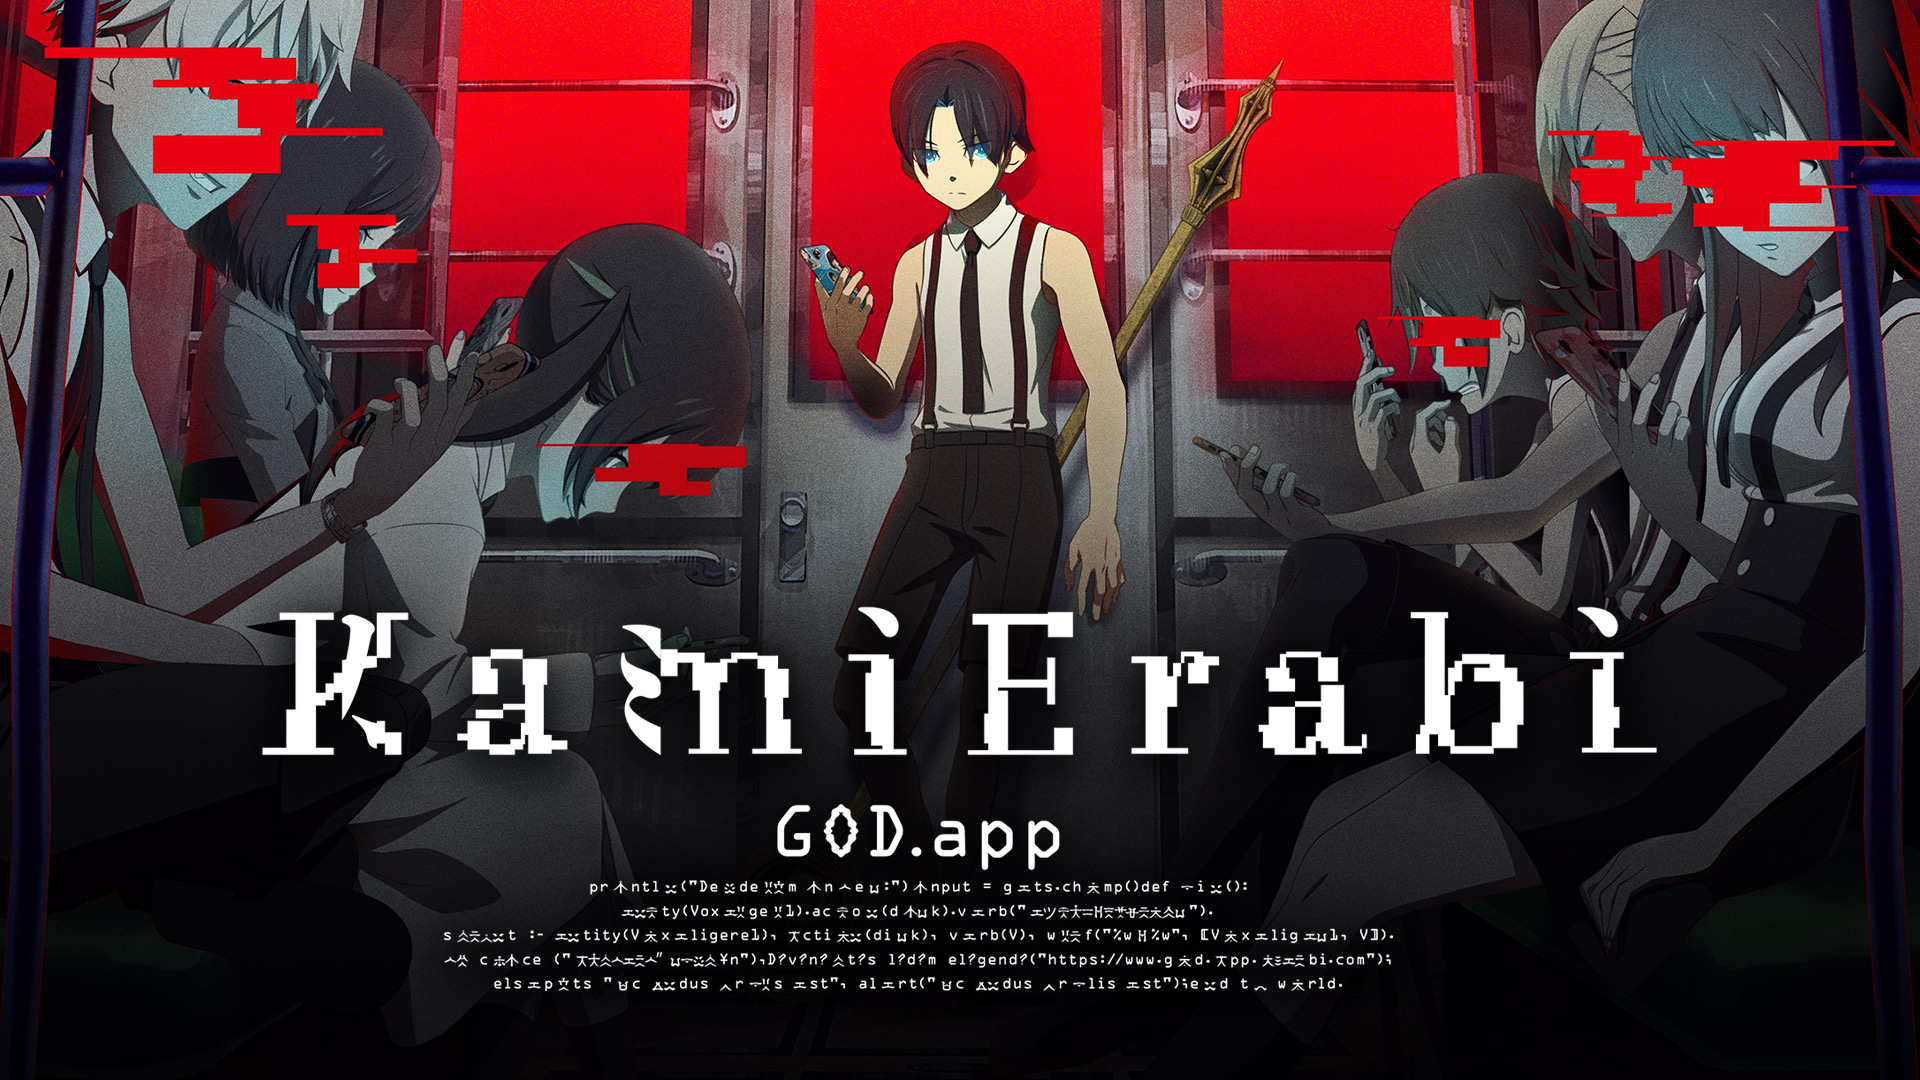 10 Anime Like KamiErabi GOD.app